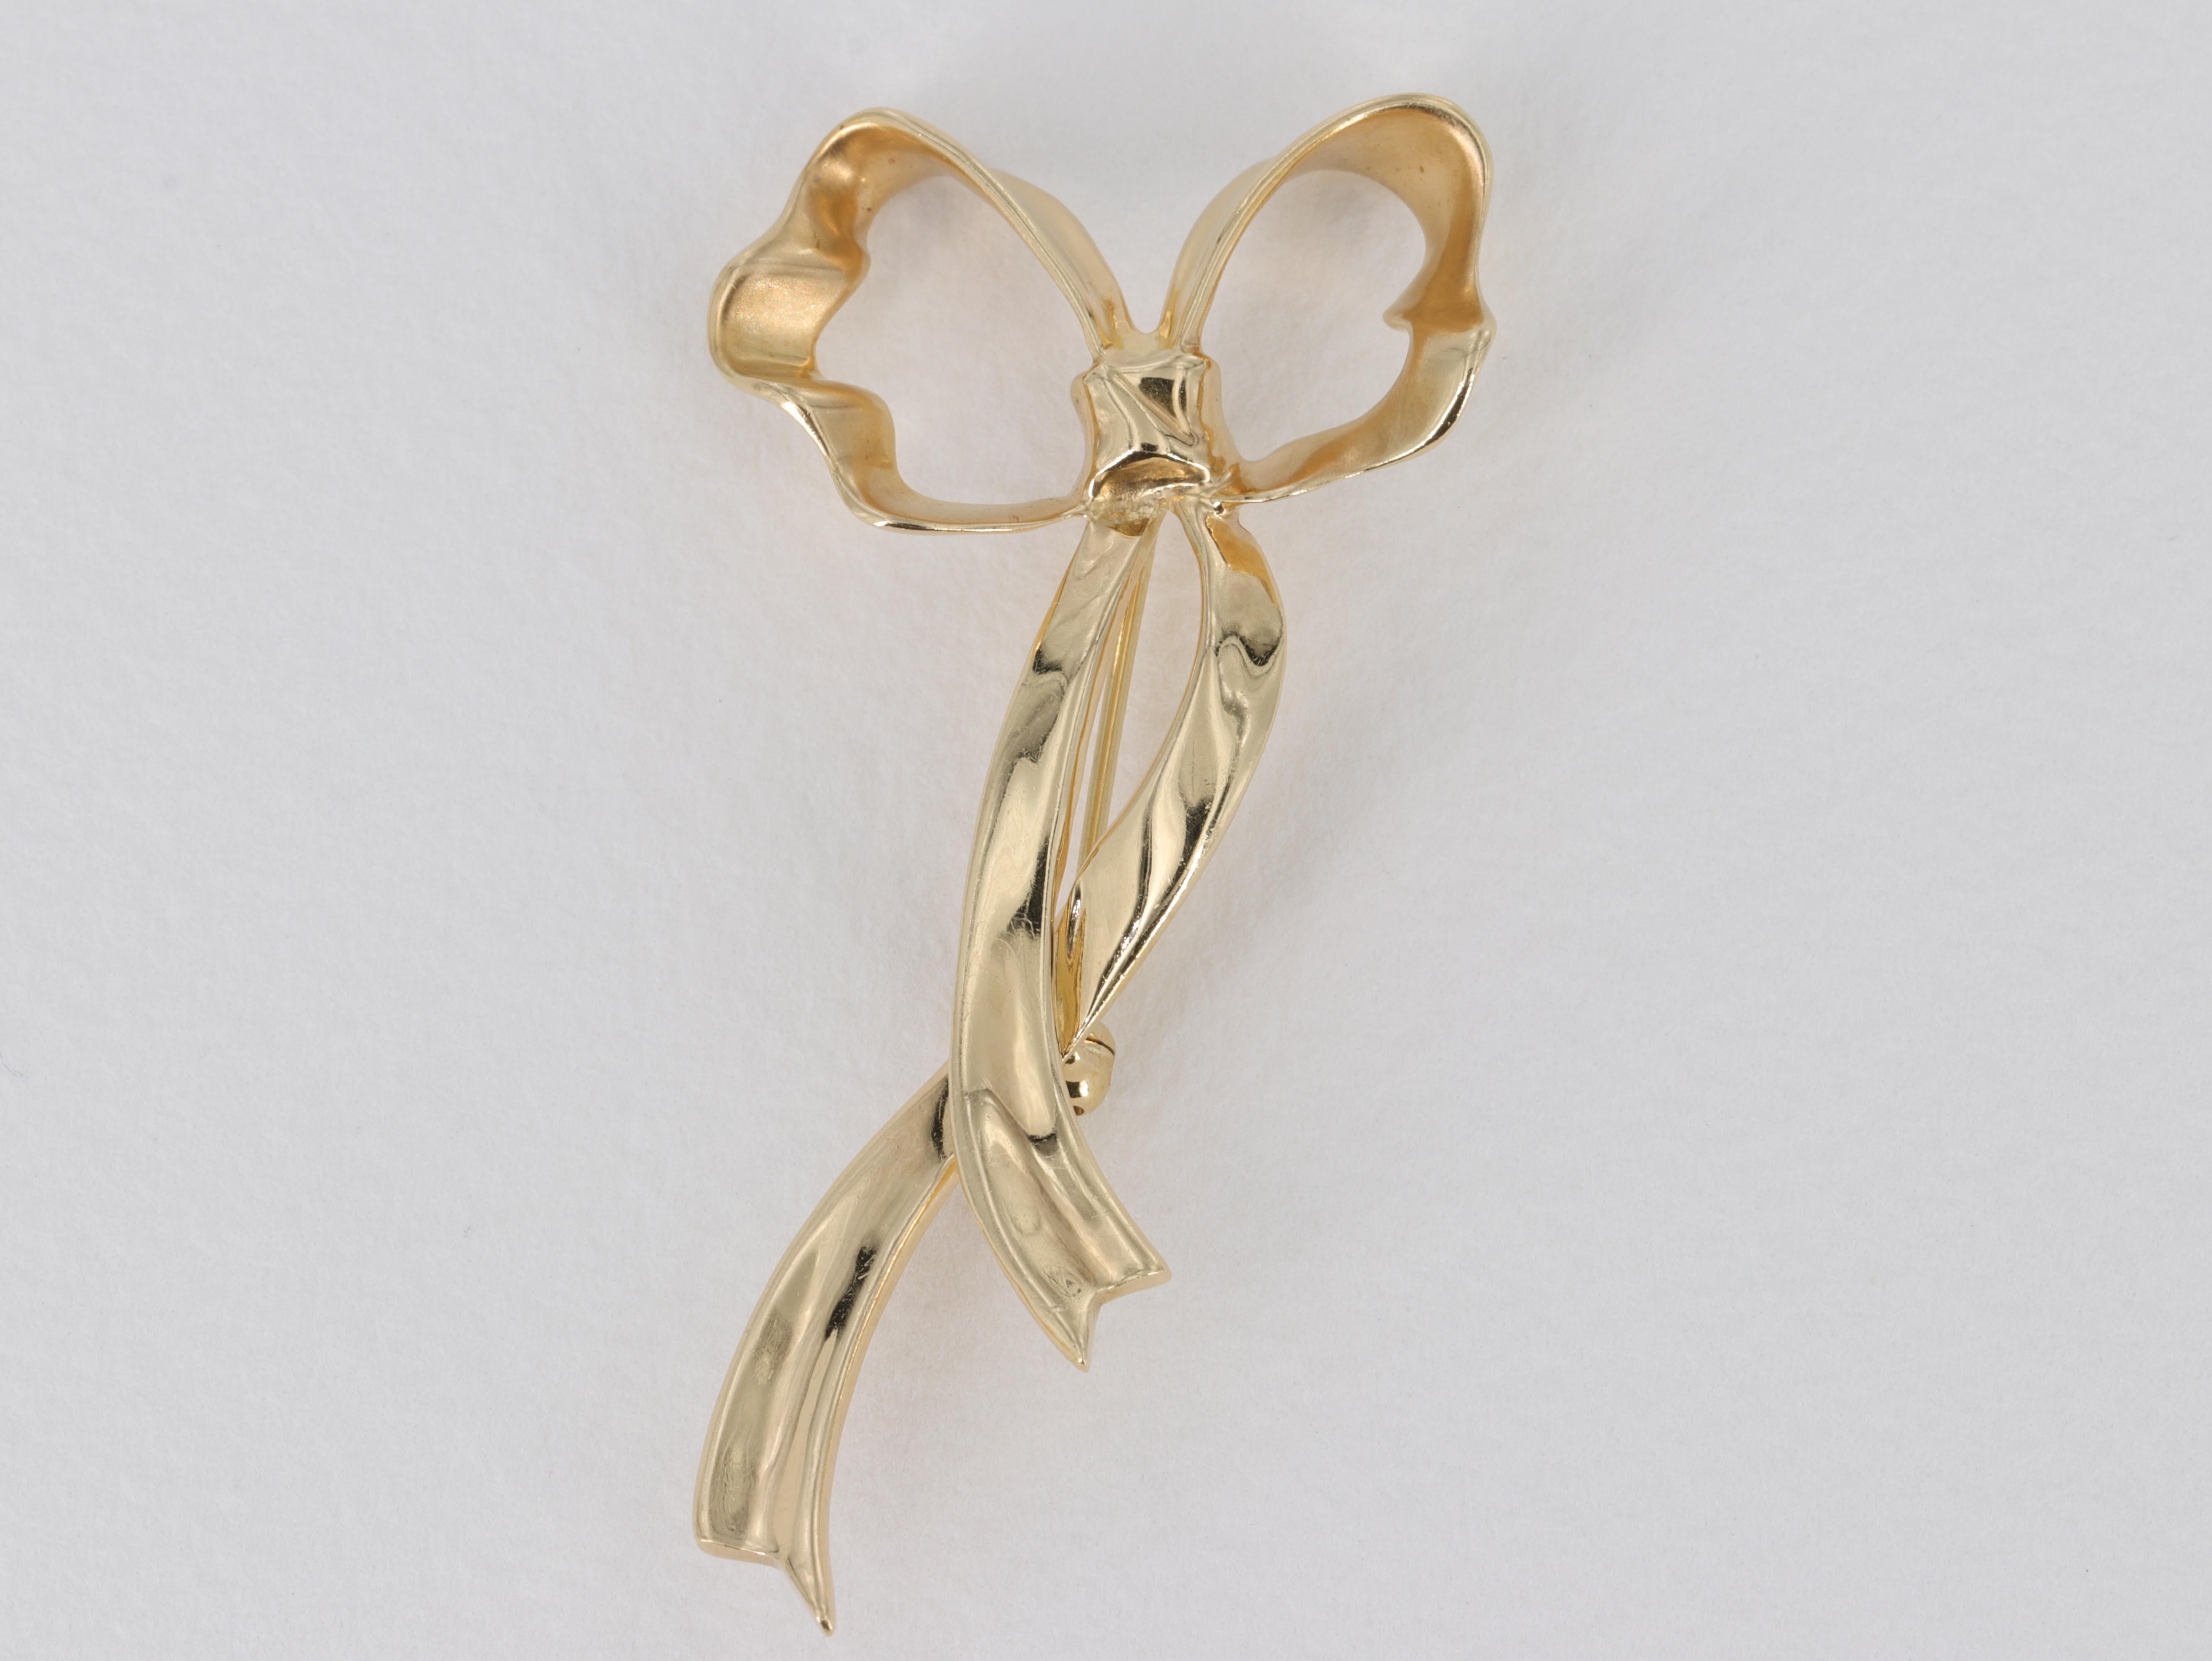 Tiffany & Co. Ribbon Bow Brooch in 18 Karat Yellow Gold 

    Brooch:
       Metal - 18k Yellow Gold 
       Weight - 8.2 Grams  
       Dimensions - 2 x 1 in
       Hallmarks - 1985/ Tiffany & Co / 750 